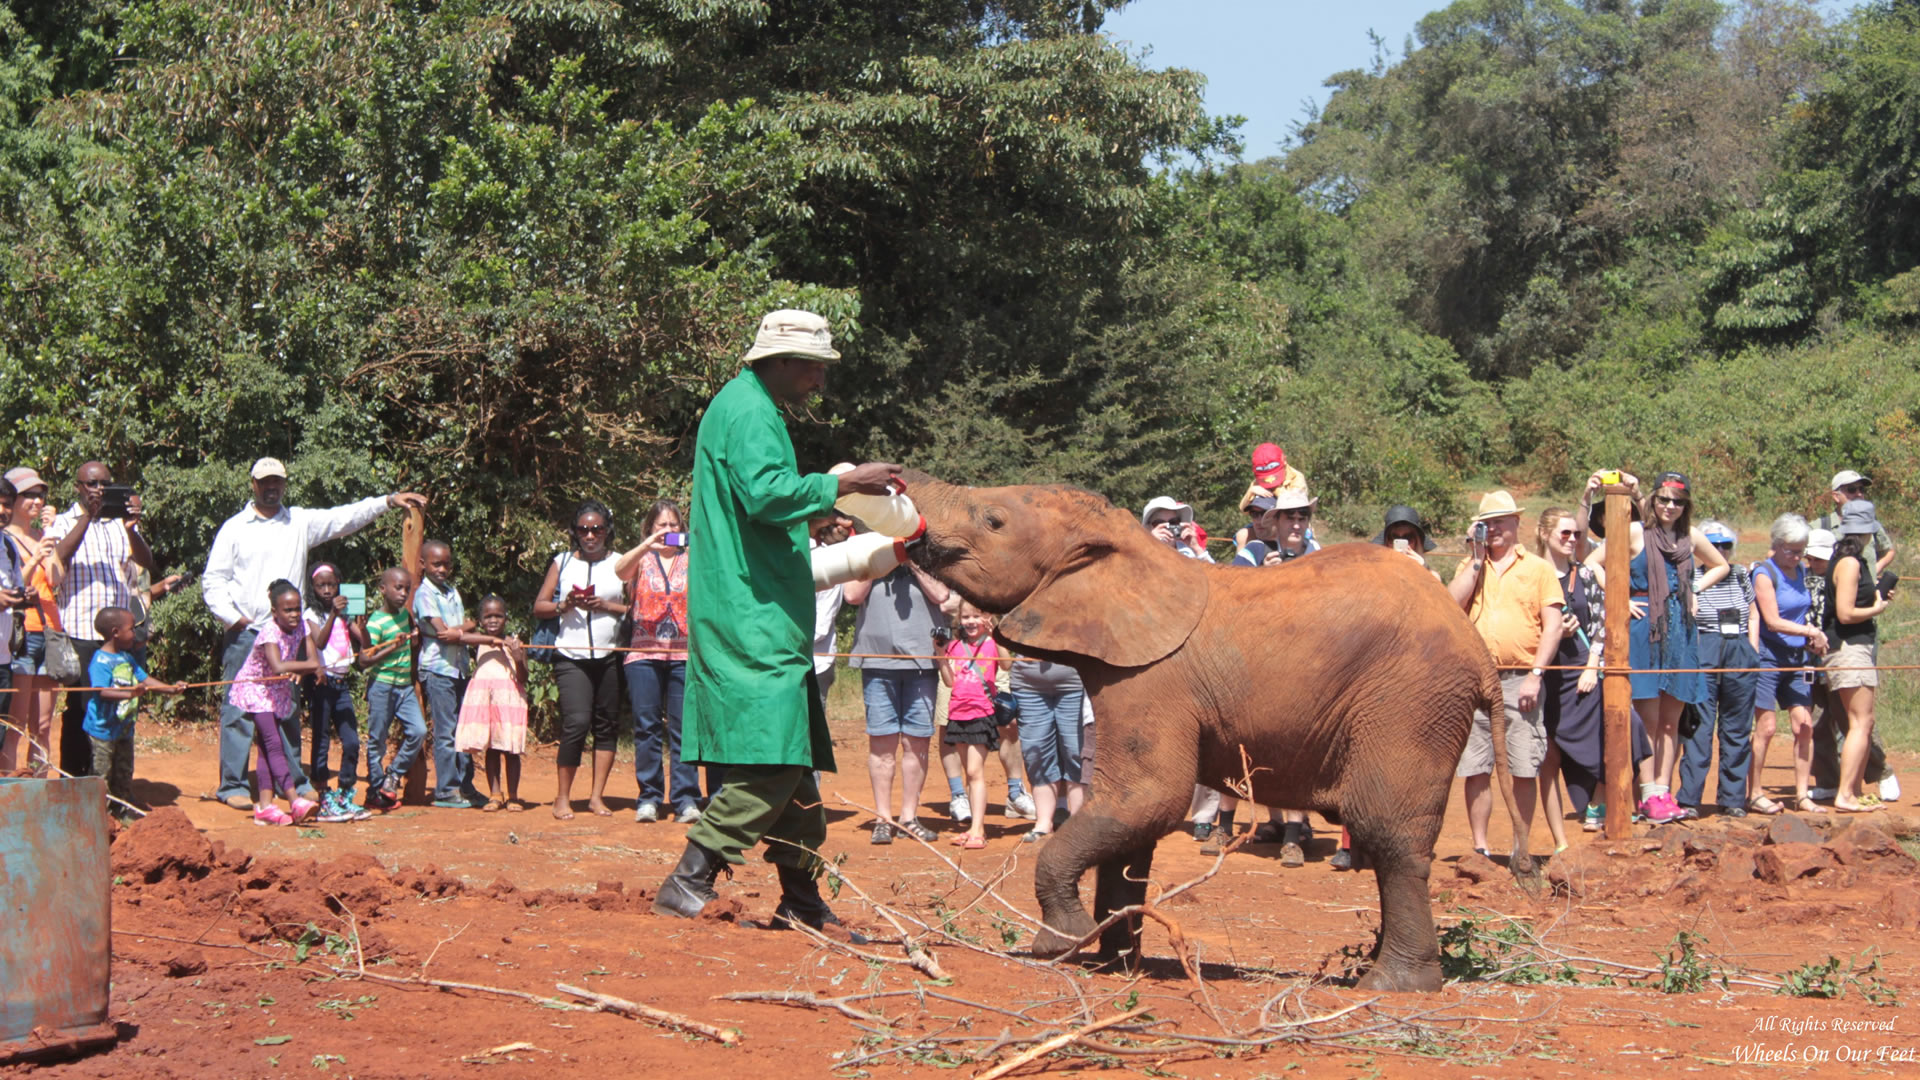 nairobi national park & david shedrick's elephant orphanage